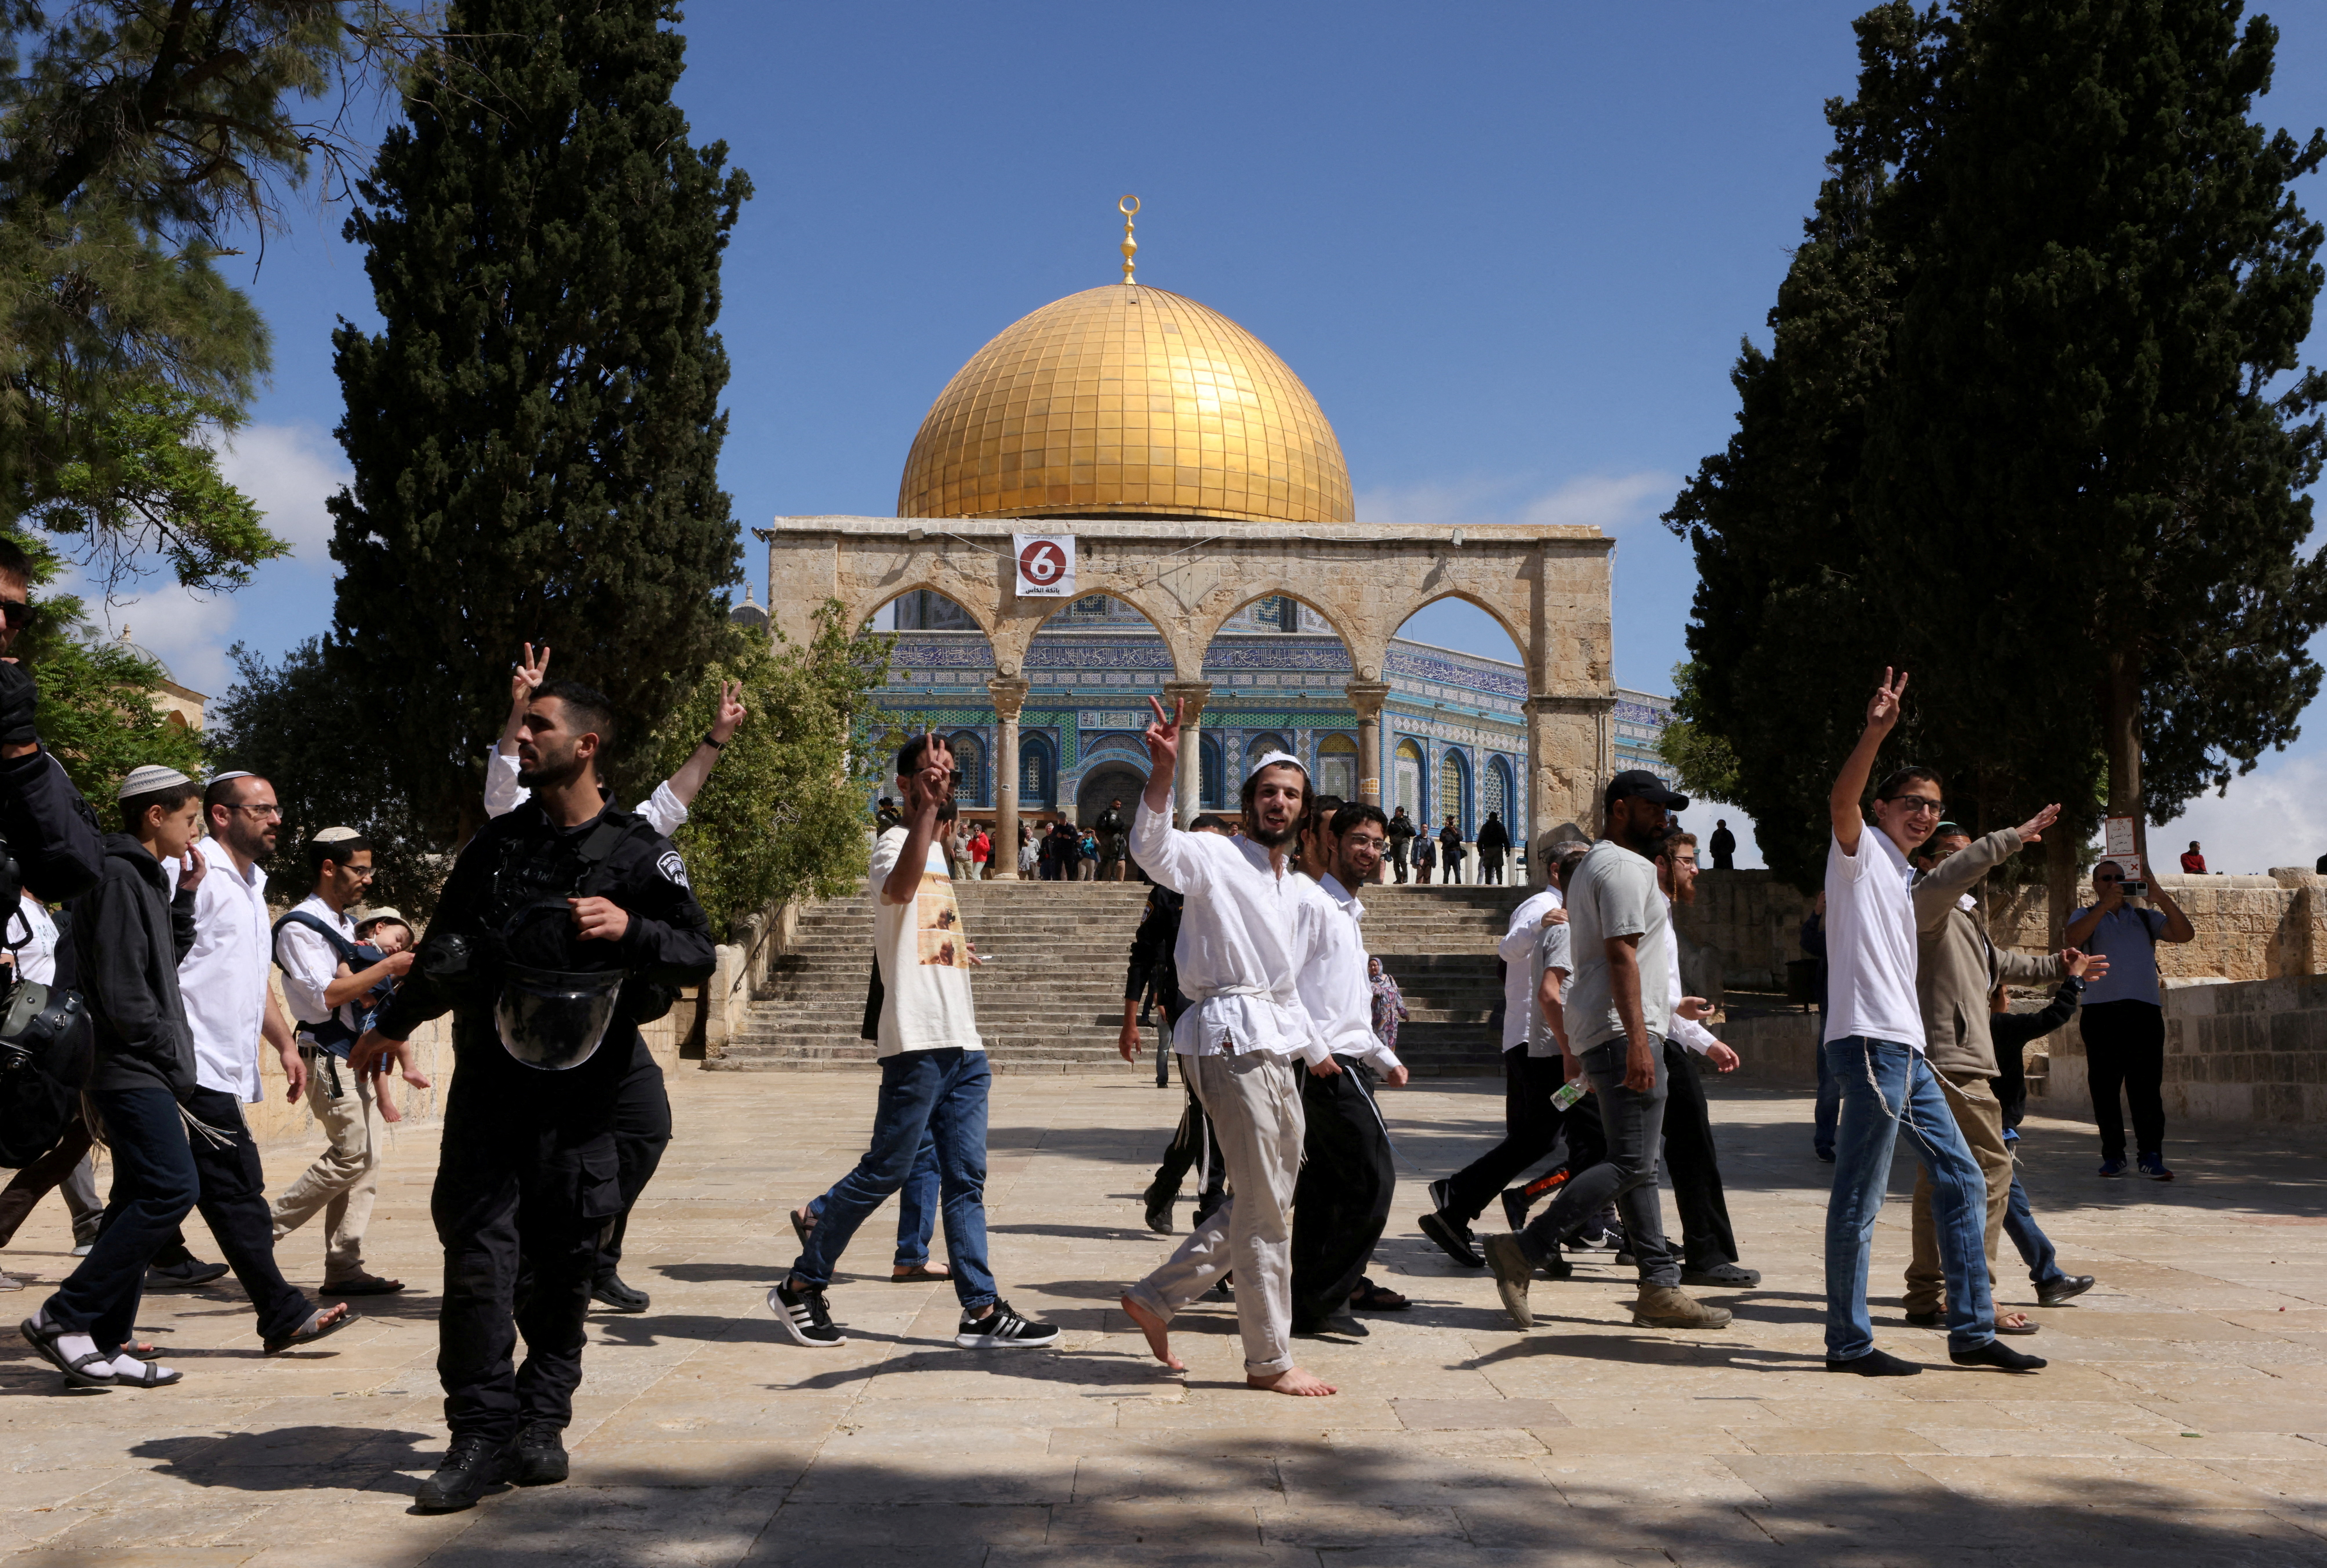 Senior Israeli Lawmaker Warns of “Religious War” Over Jerusalem moves